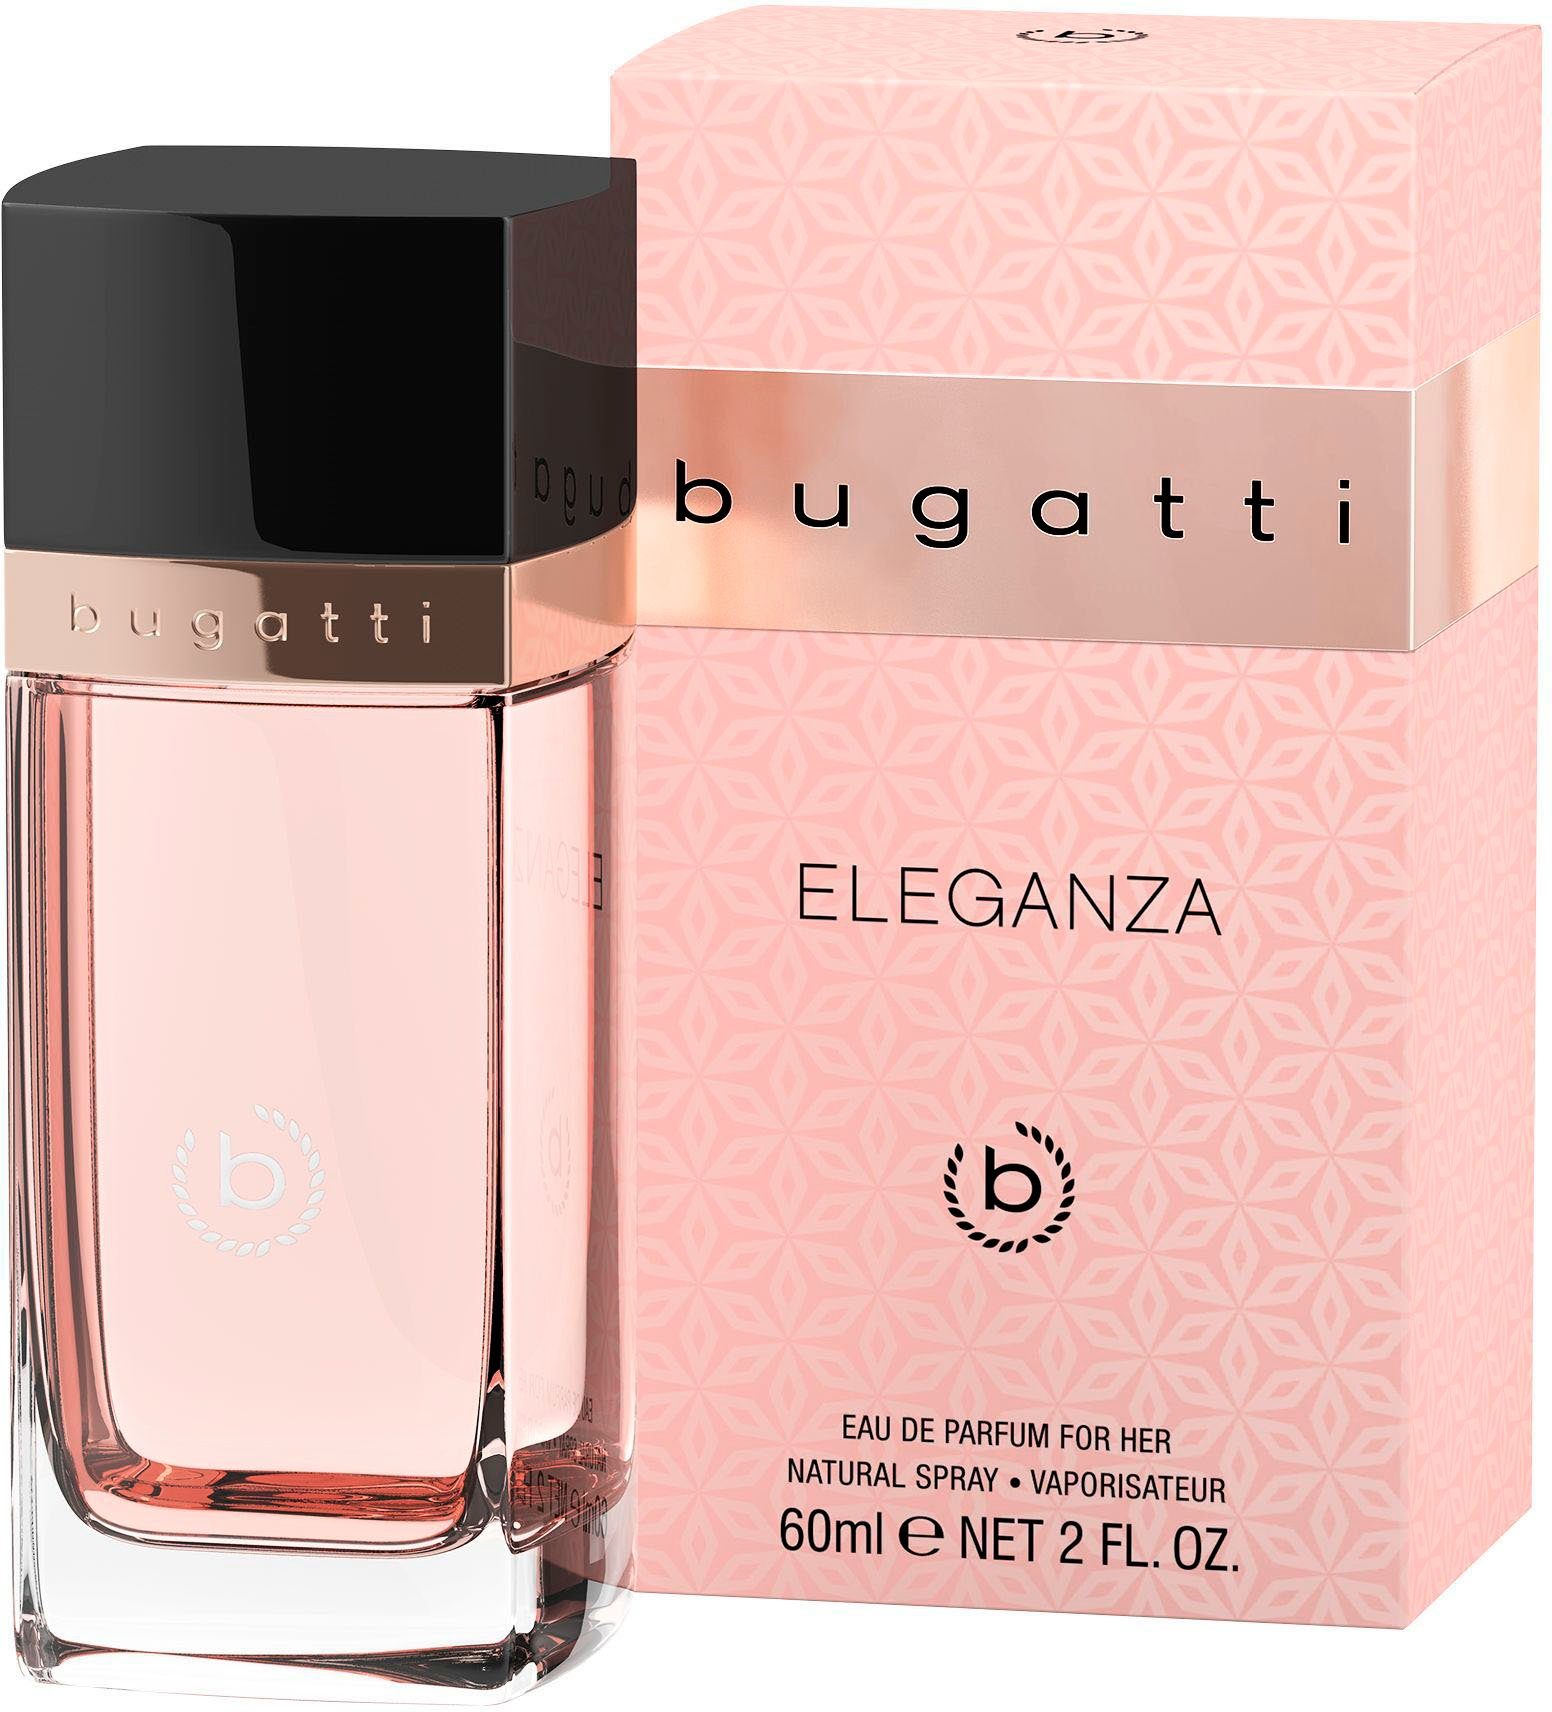 bugatti Eau de Parfum Eleganza EdP ml 60